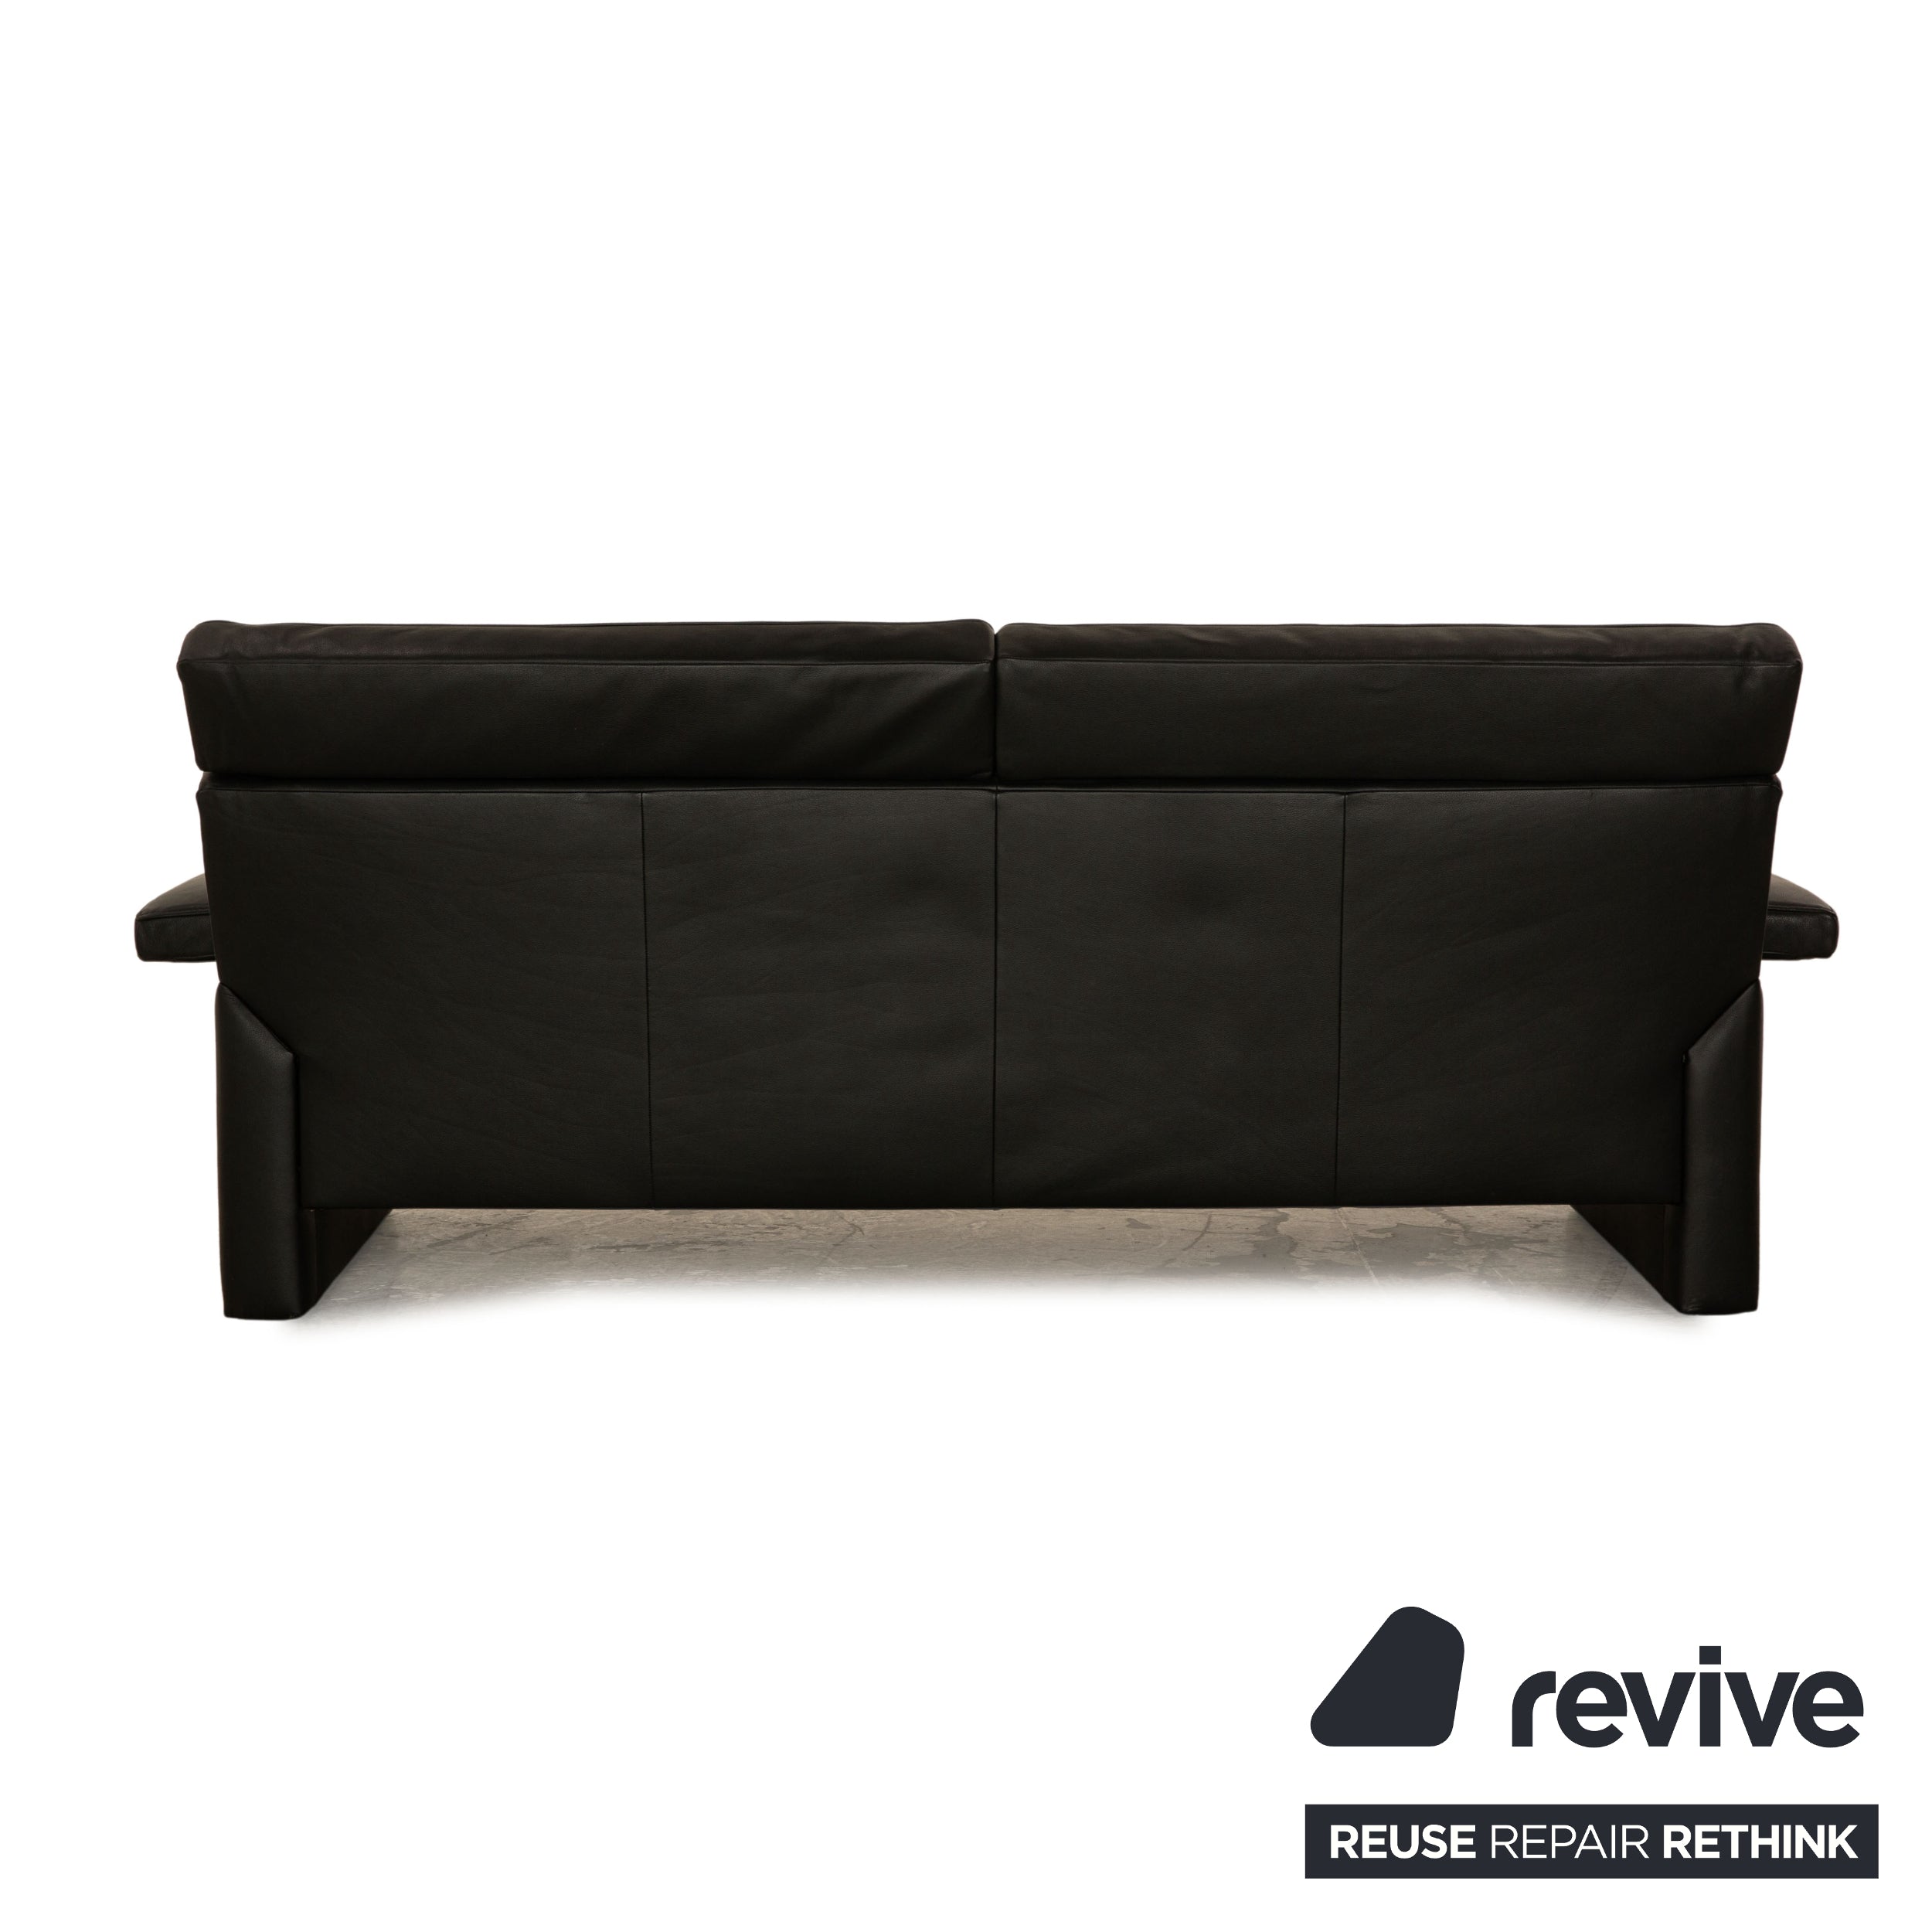 Jori JR 8750 Leder Zweisitzer Schwarz Sofa Couch